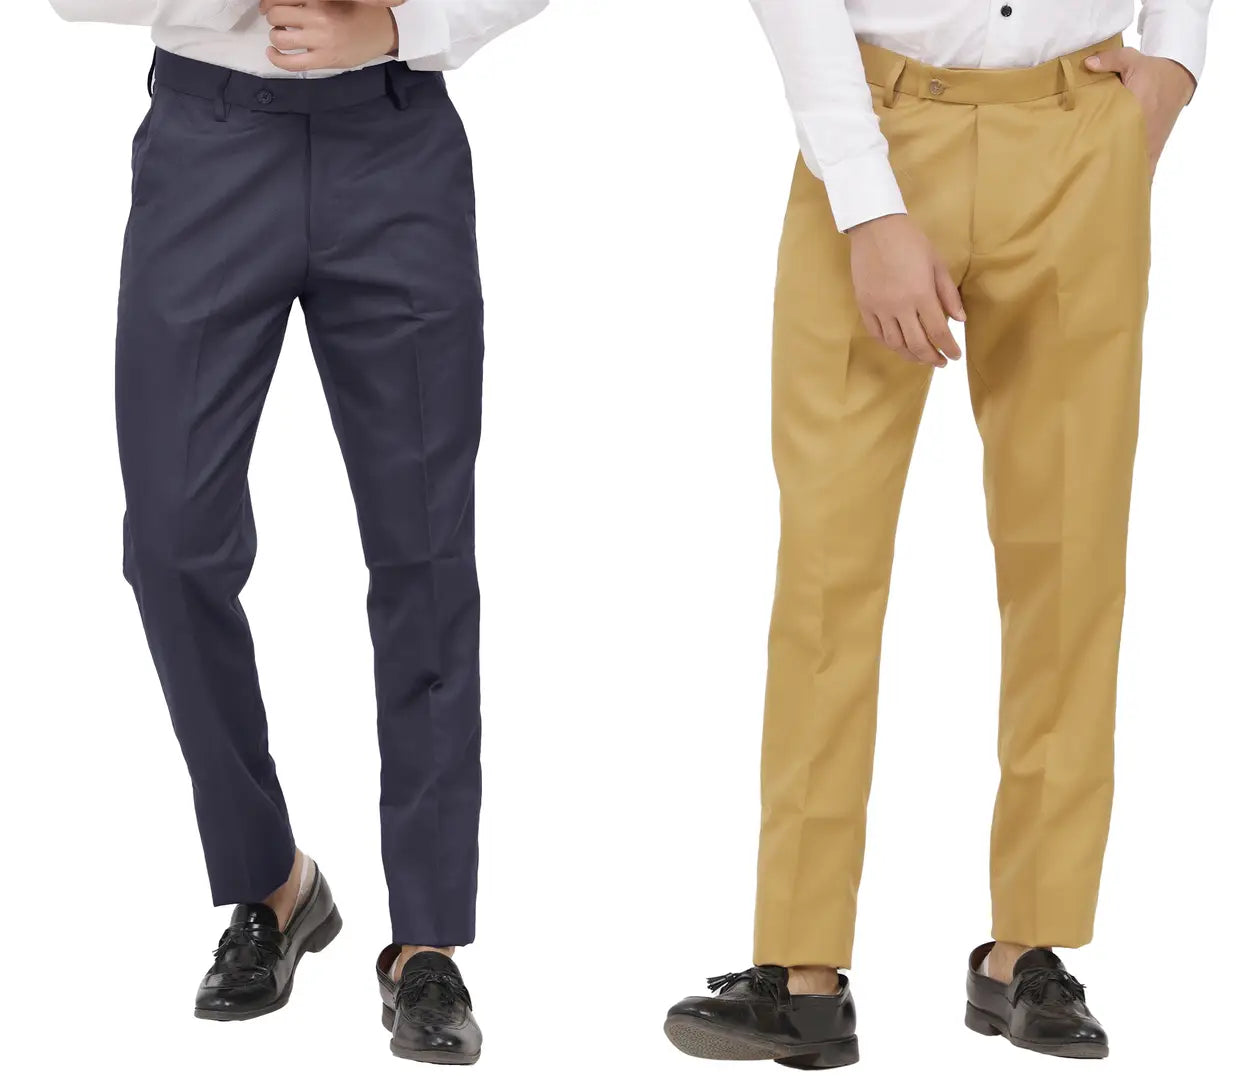 Kundan Men Poly-Viscose Blended Dark Grey and Khaki Formal Trousers ( Pack of 2 Trousers )